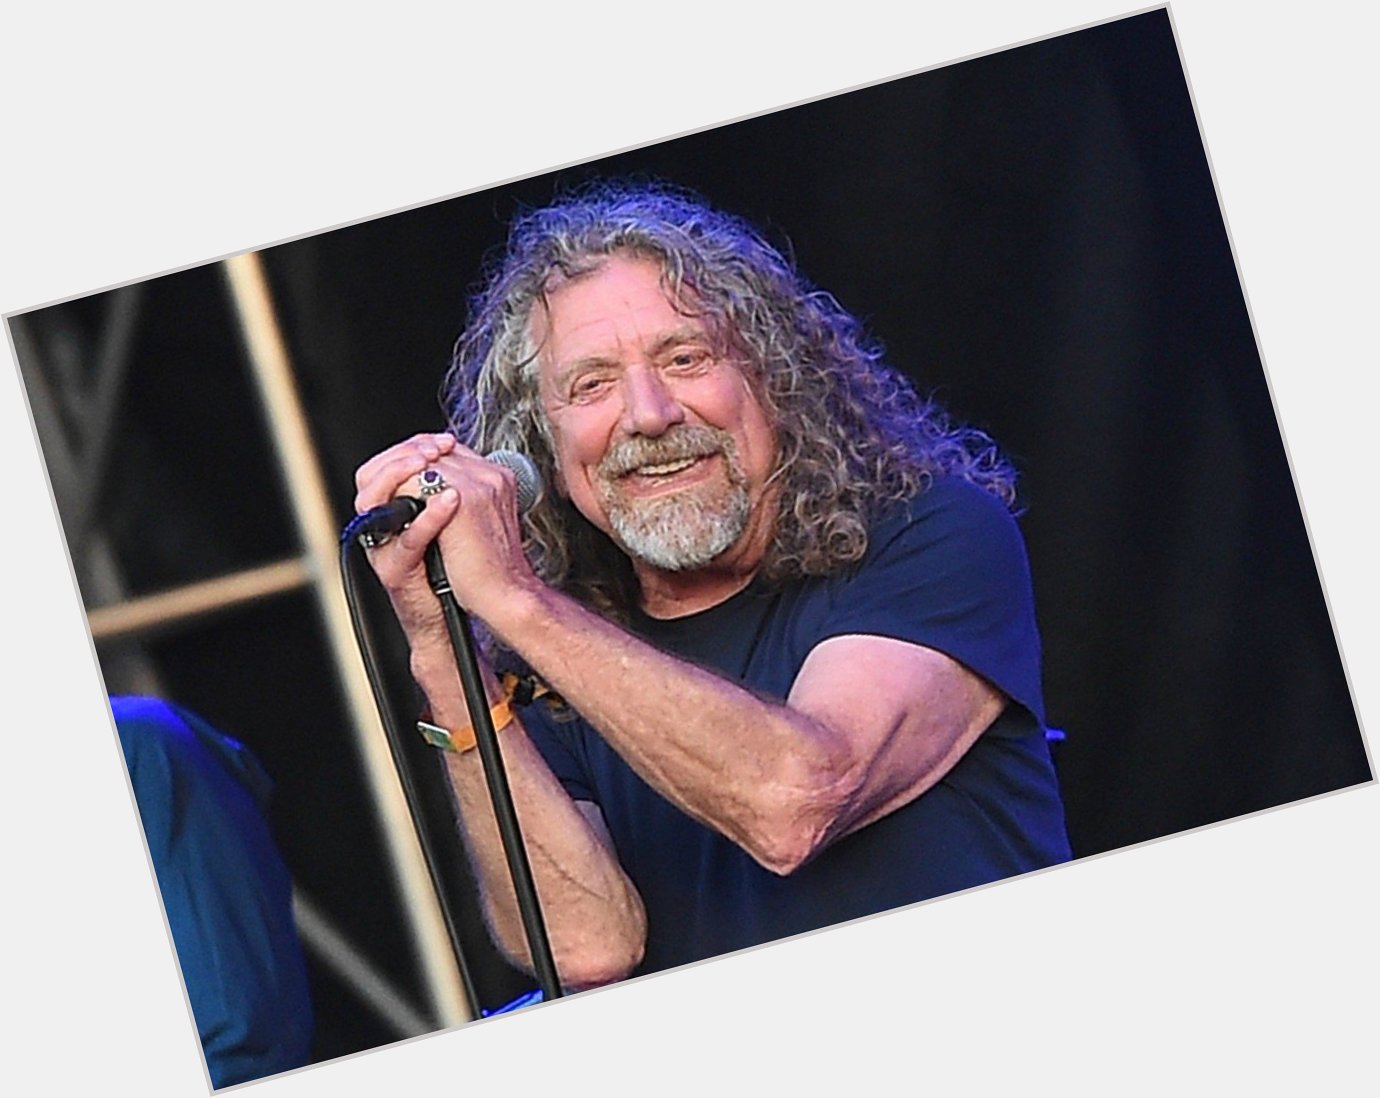 Happy Birthday Sir Robert Plant! 